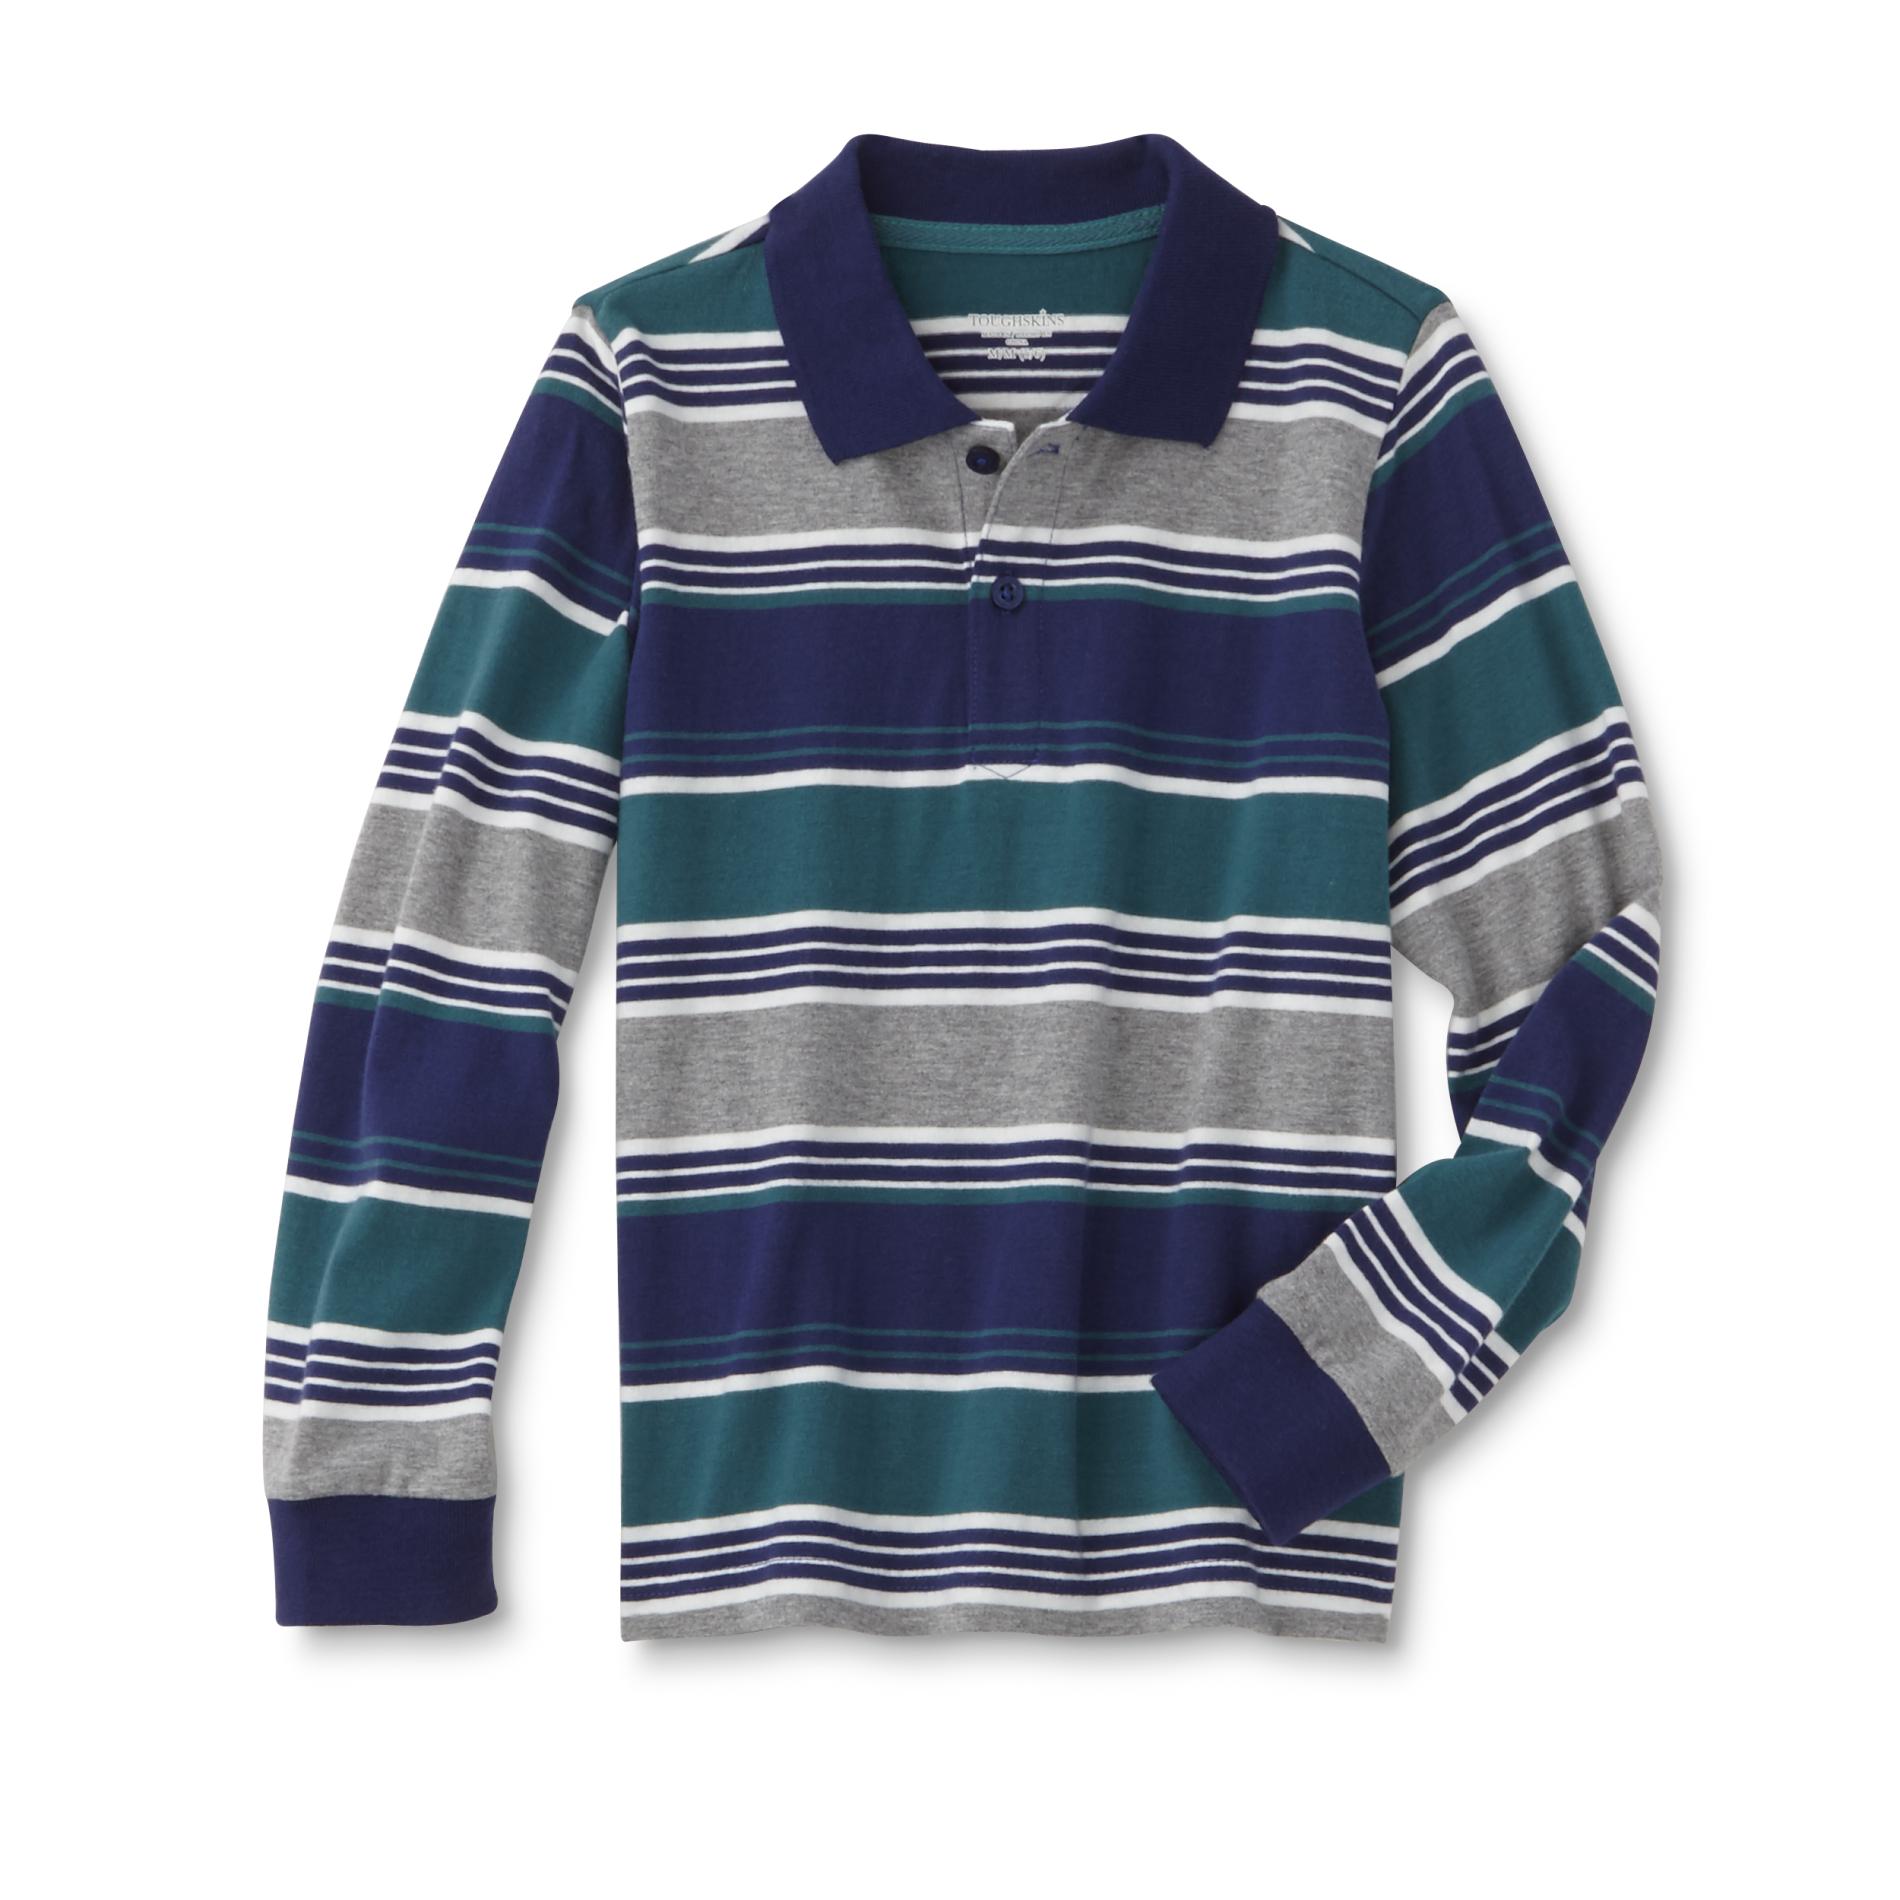 Toughskins Boys' Long-Sleeve Polo Shirt - Striped